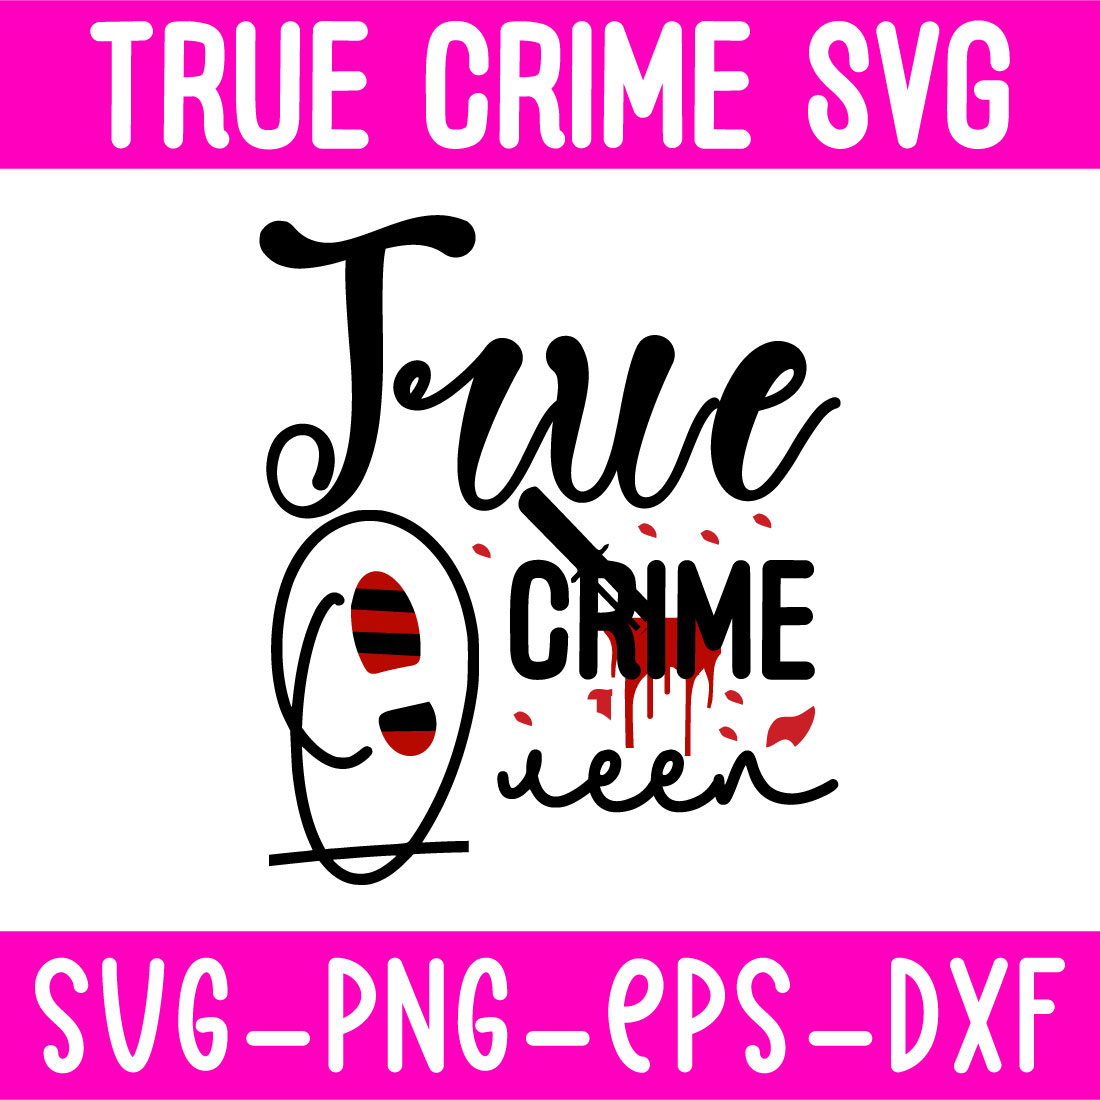 True-Crime Svg preview image.